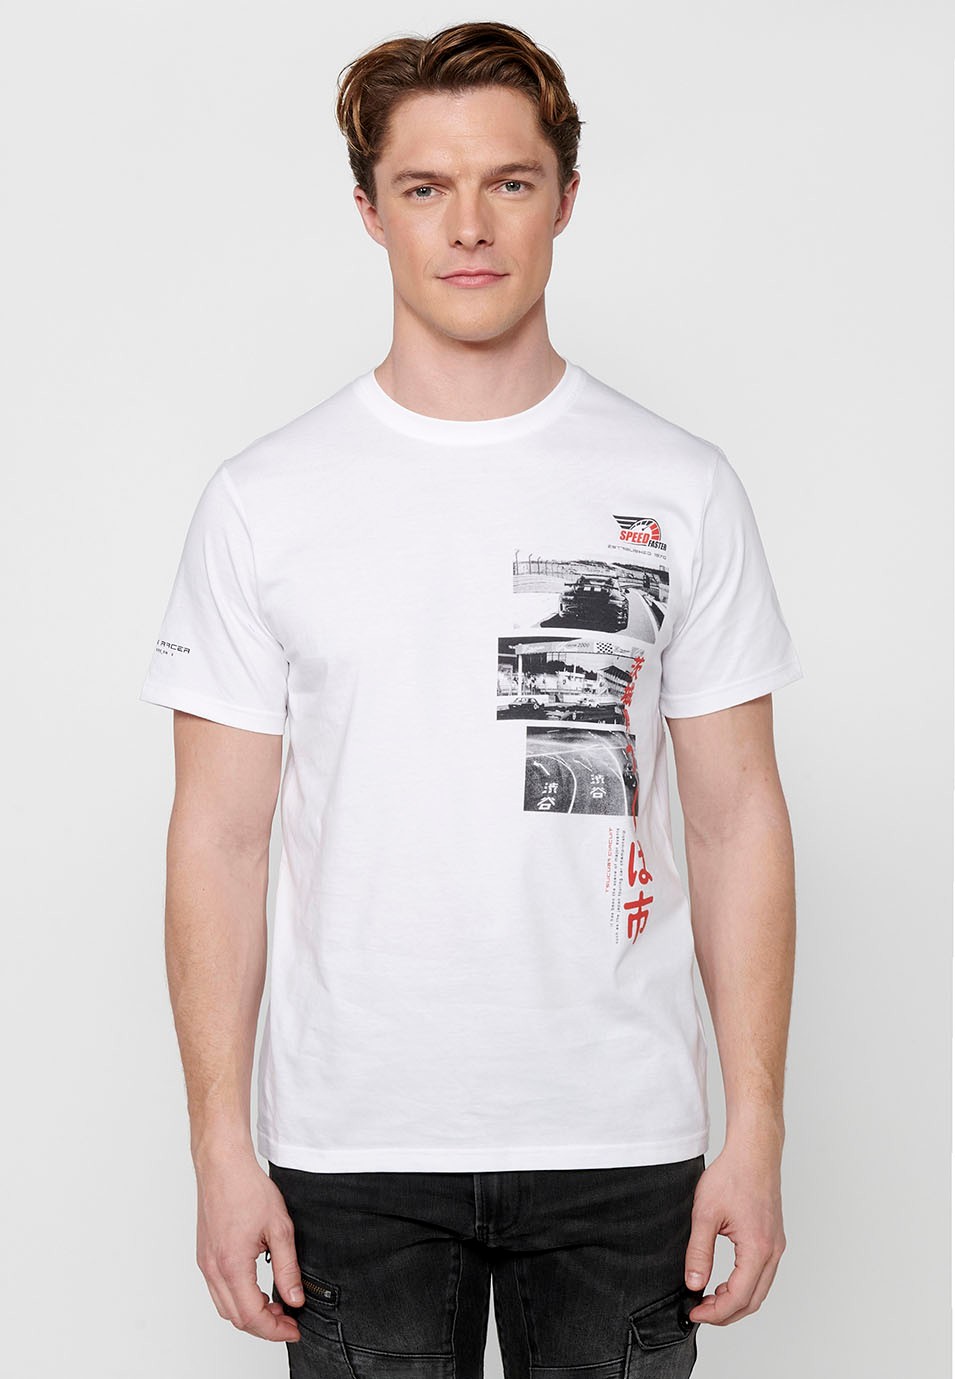 Men's white cotton short-sleeved t-shirt, multicolored chest print